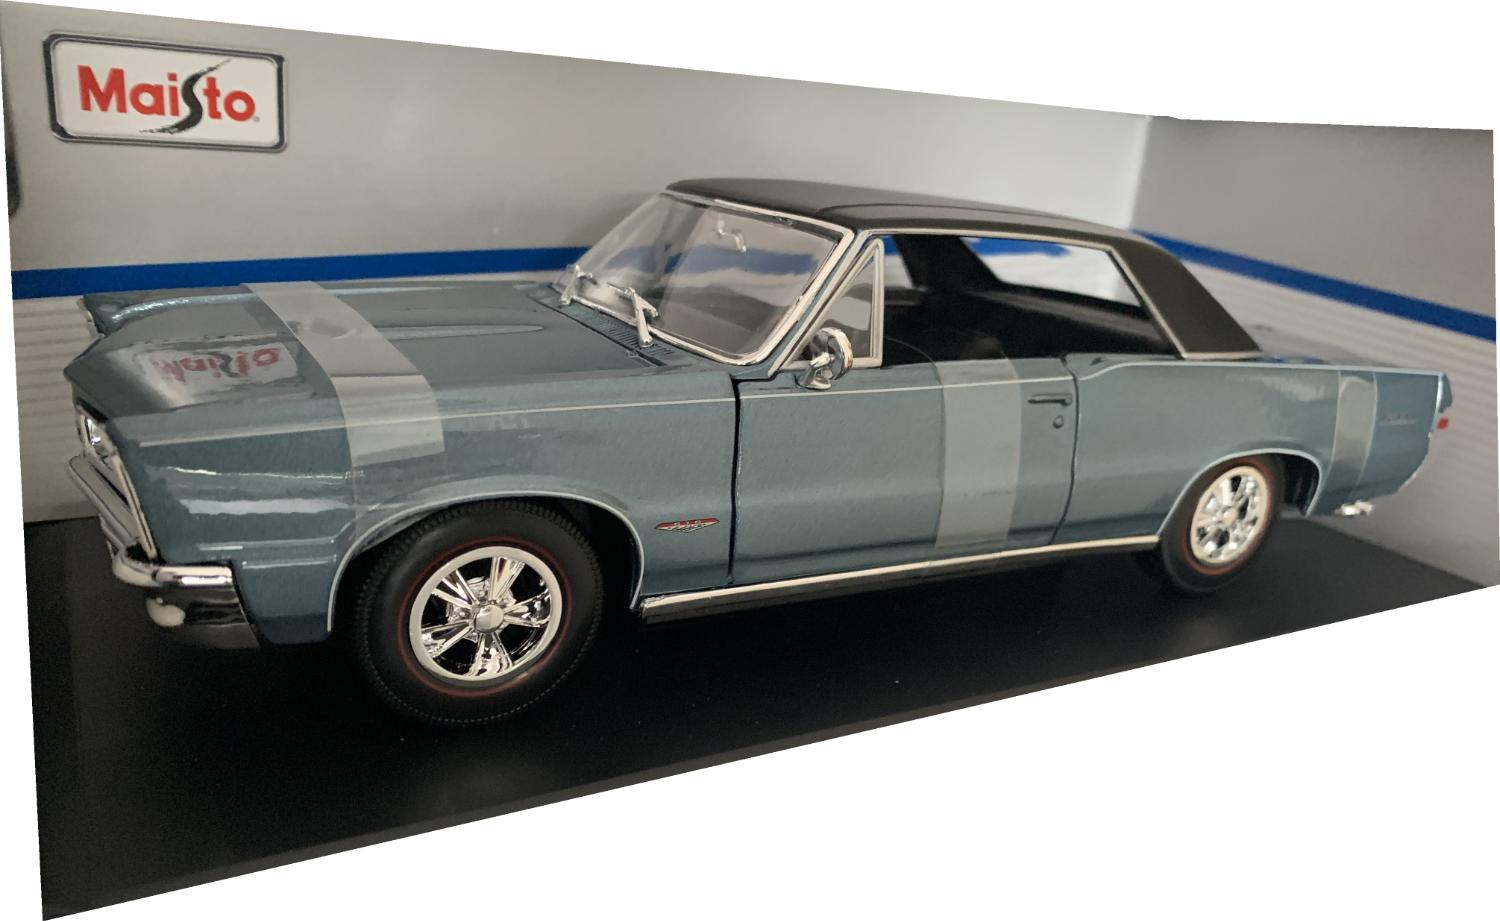 Pontiac GTO Hurst 1965 in blue 1:18 scale model from Maisto